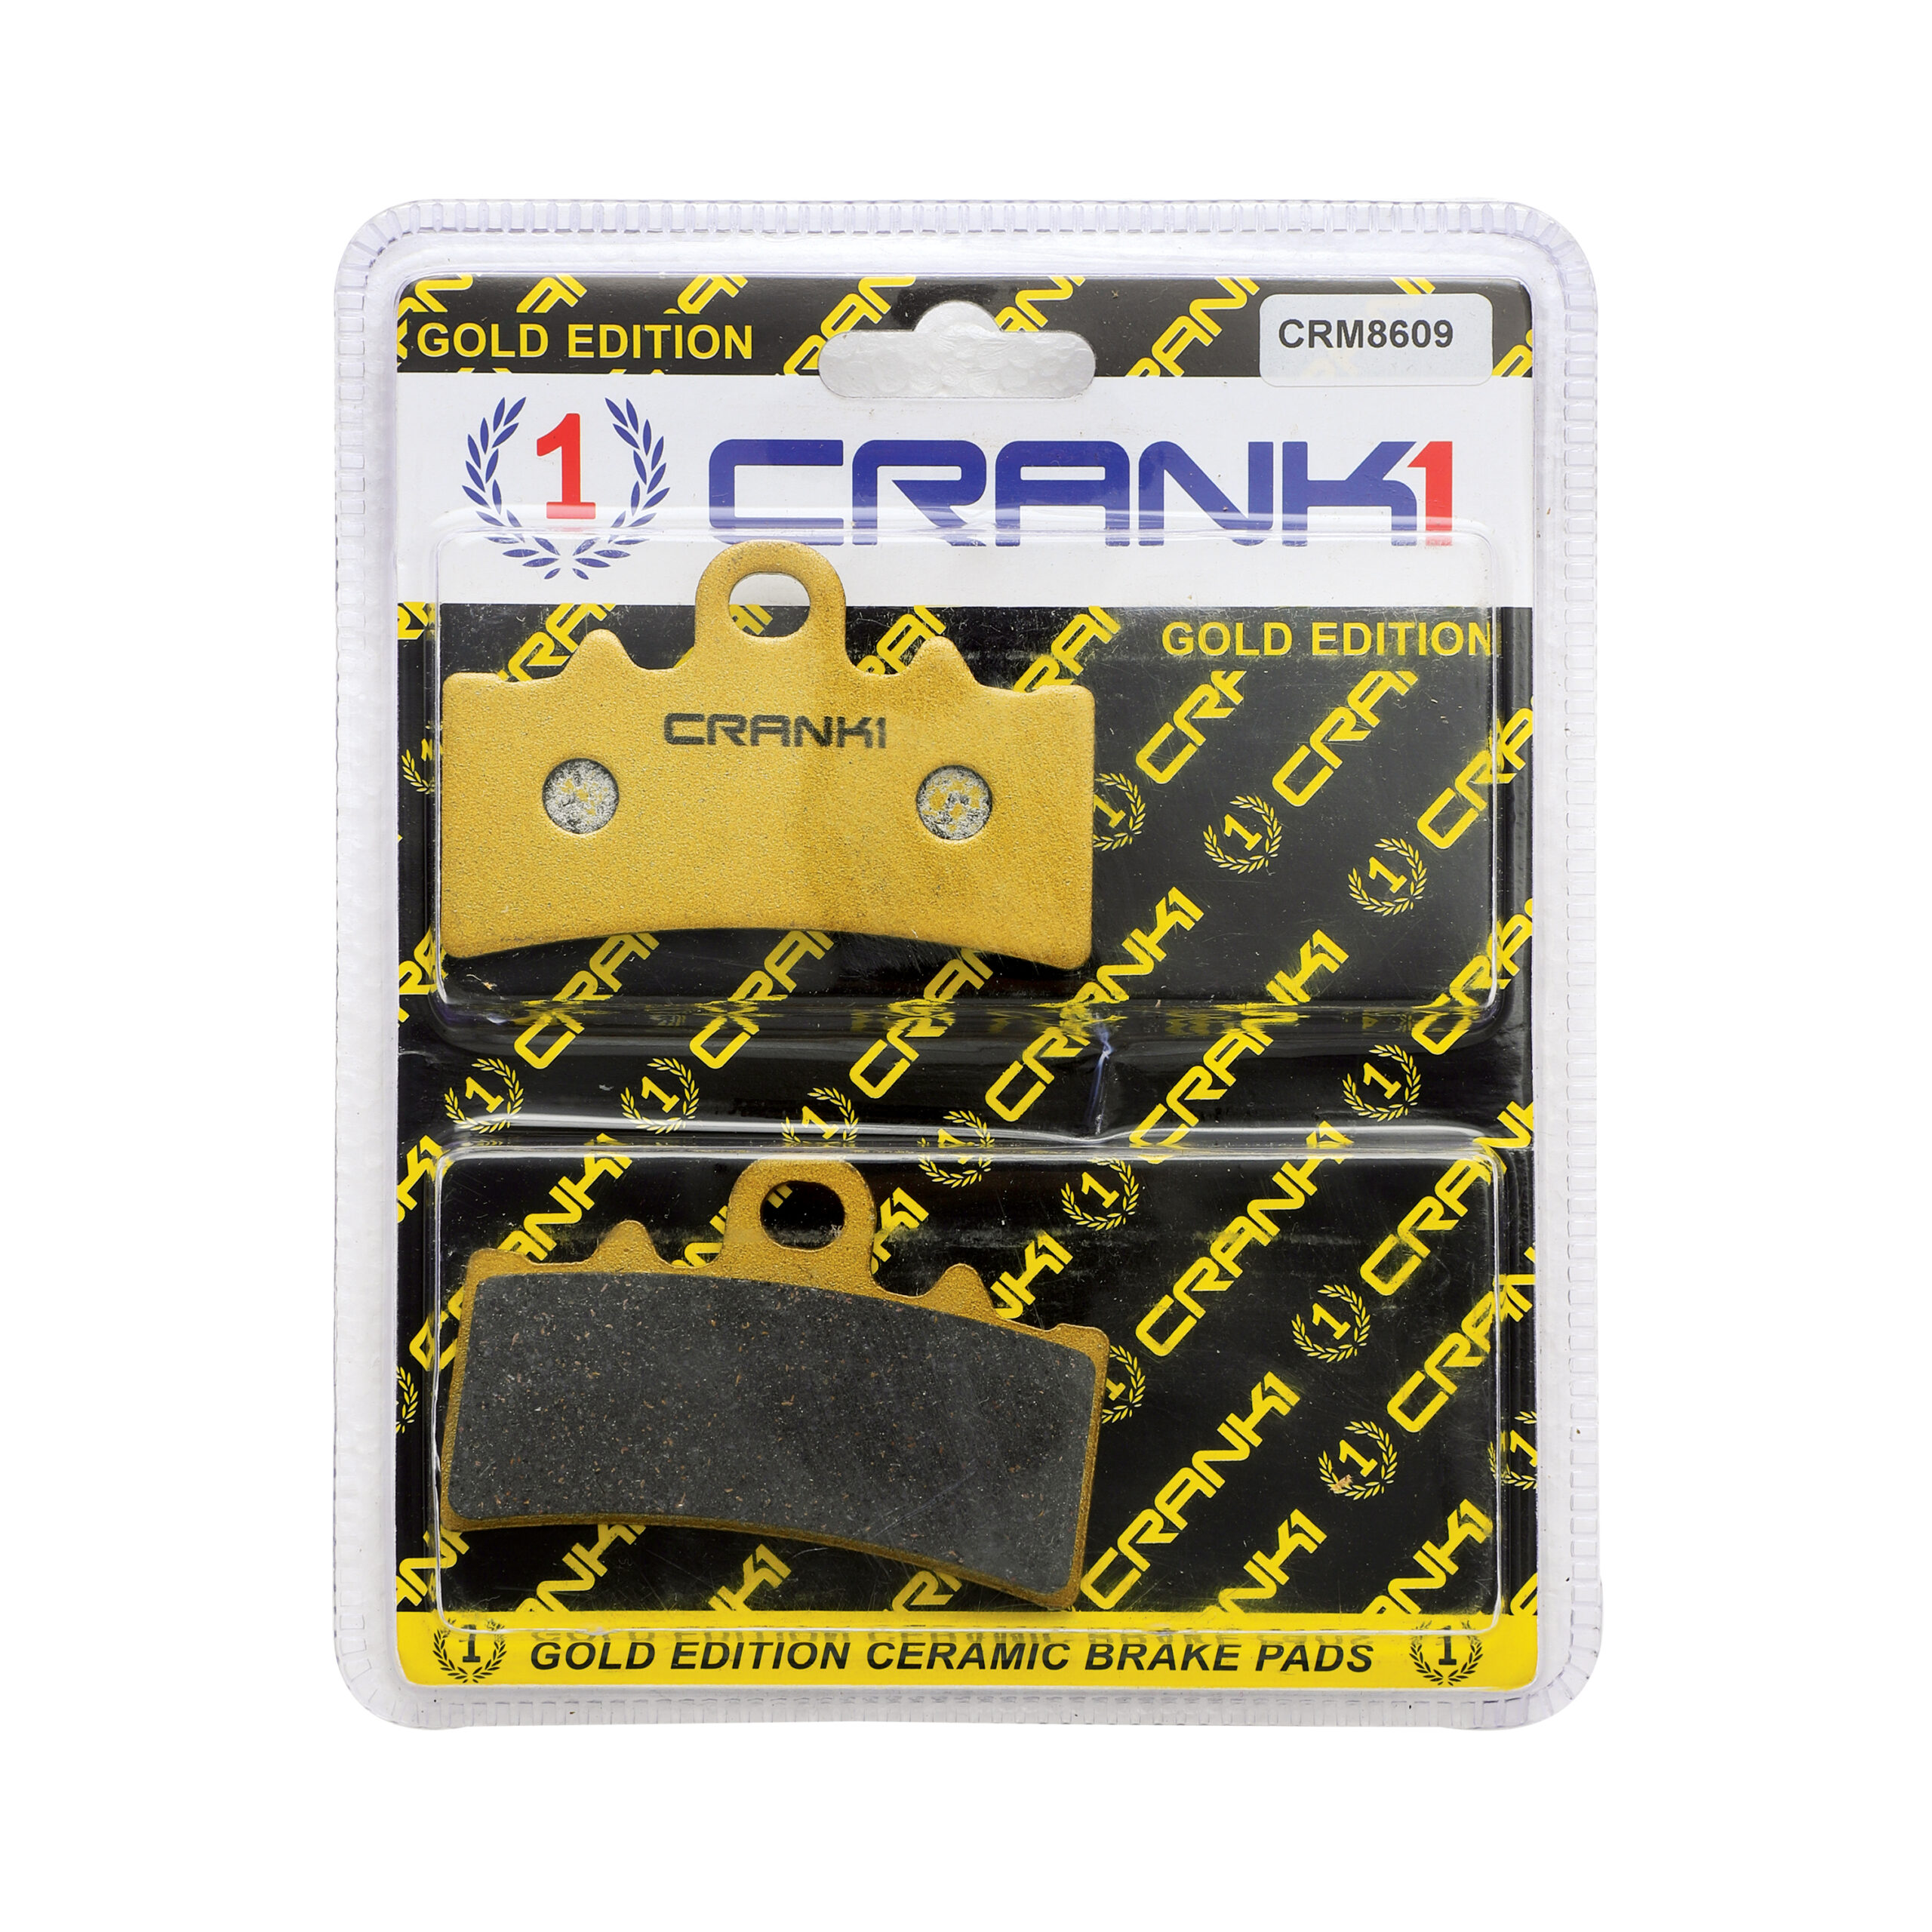 BRAKE PAD FOR FRONT KTM 250 RC/ DUKE -CRM8609-CRANK1 - Crank1